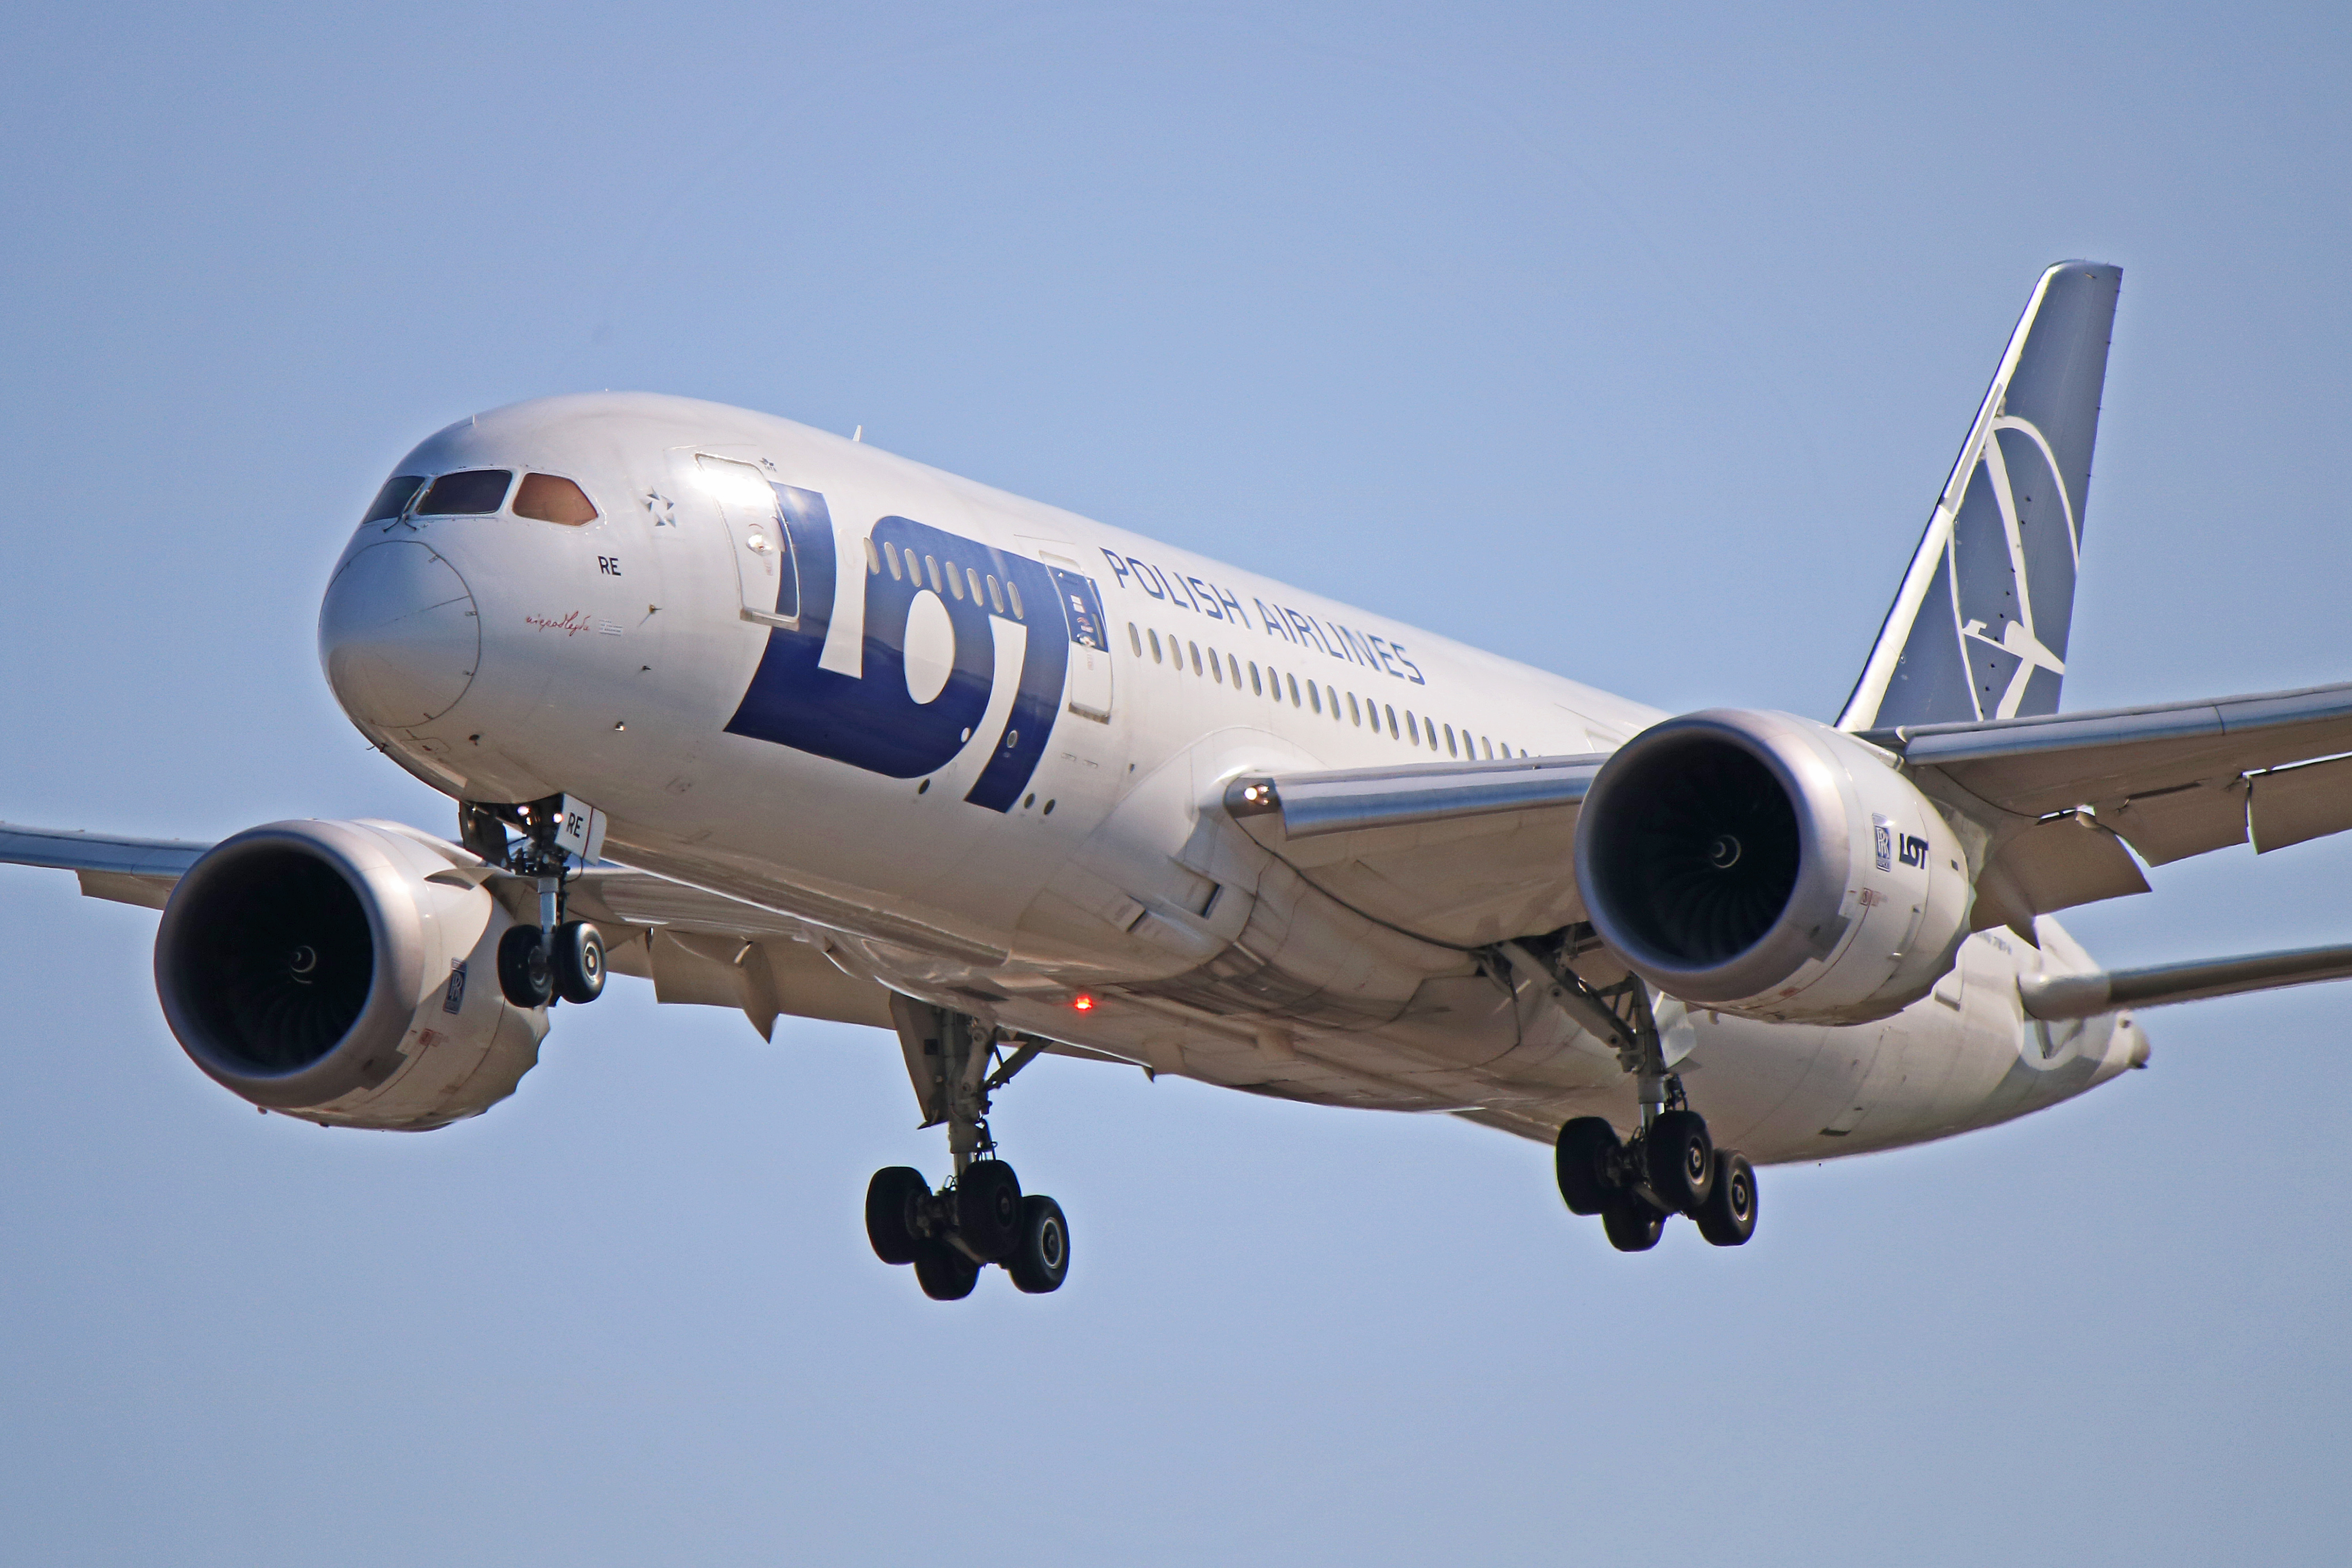 sp-lre lot polish airlines boeing 787-8 dreamliner